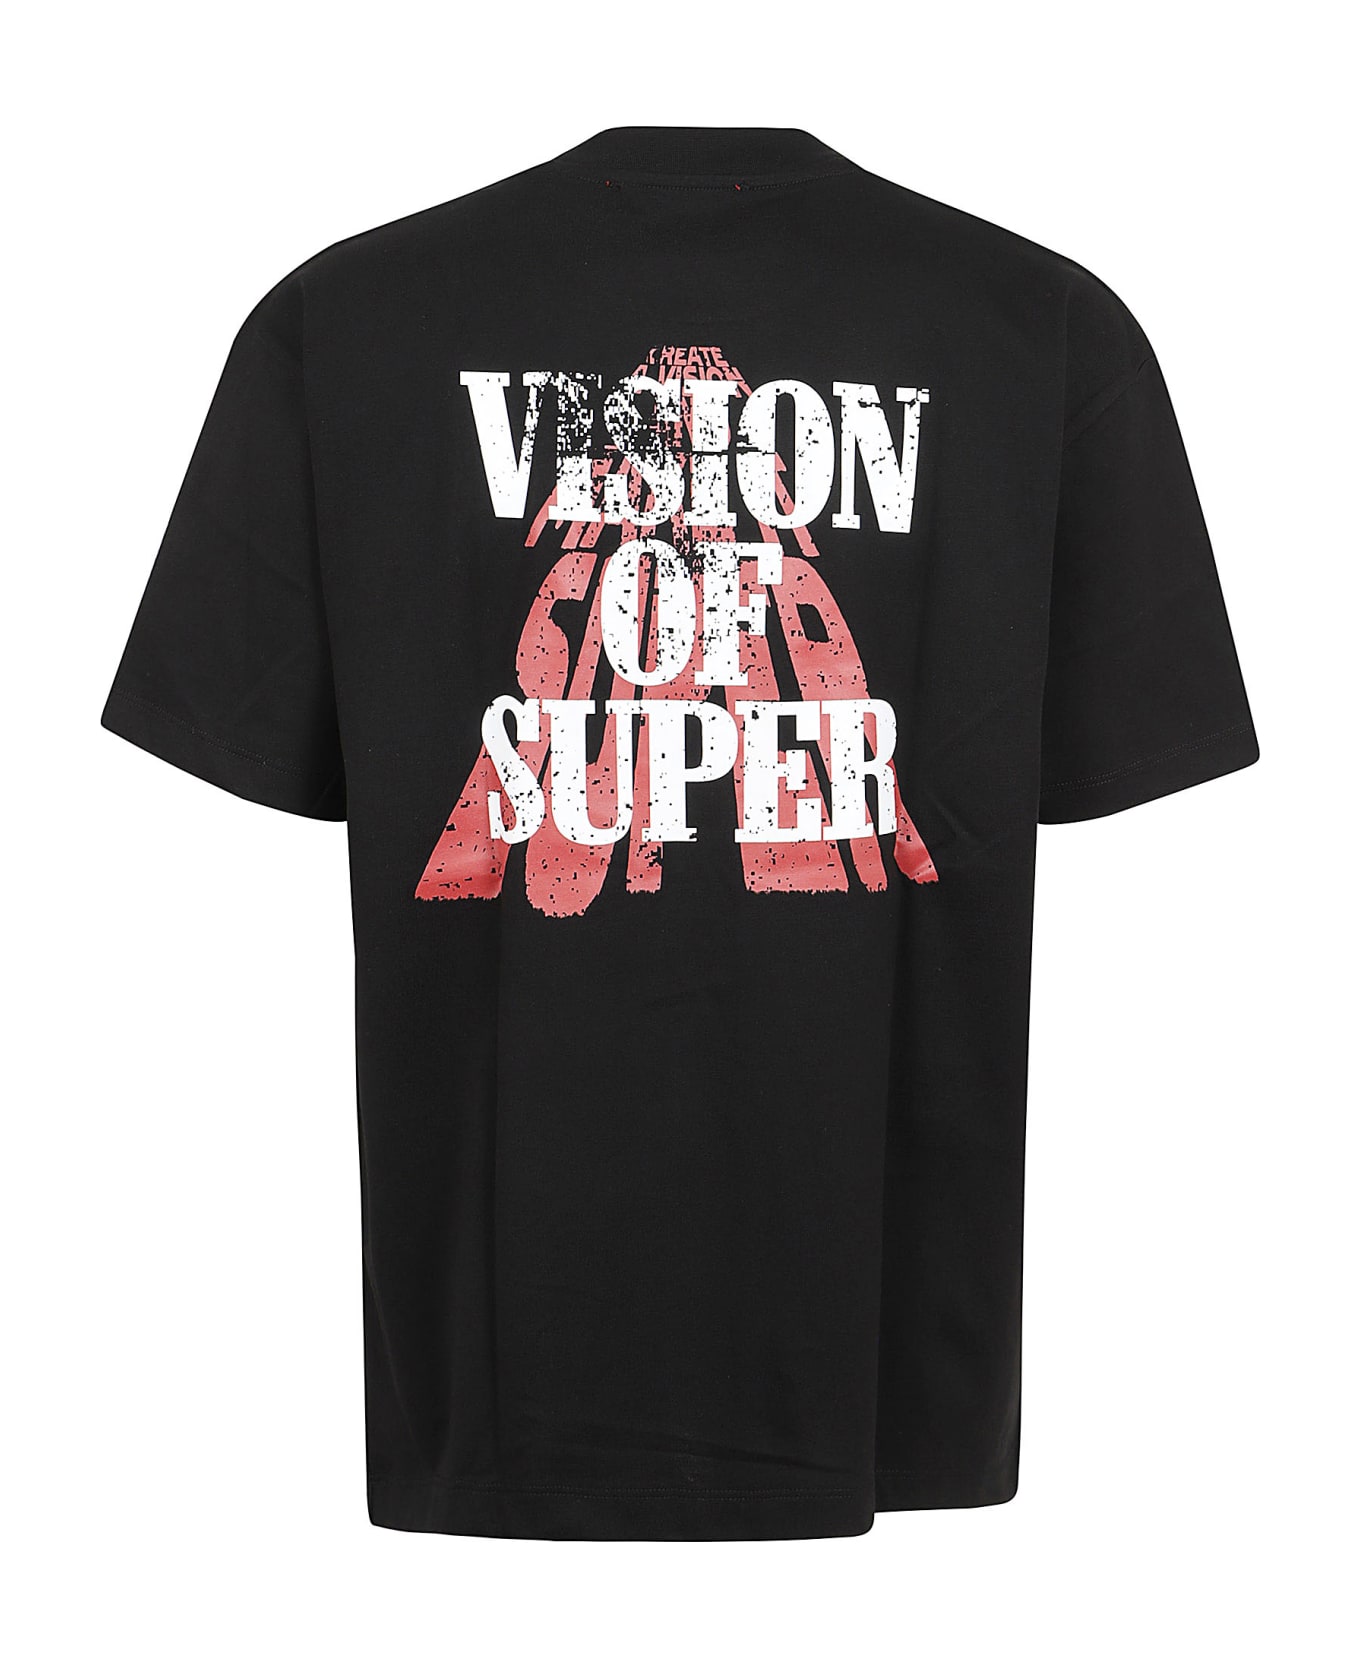 Vision of Super Black T-shirt With "vision Slogan" Print - Black